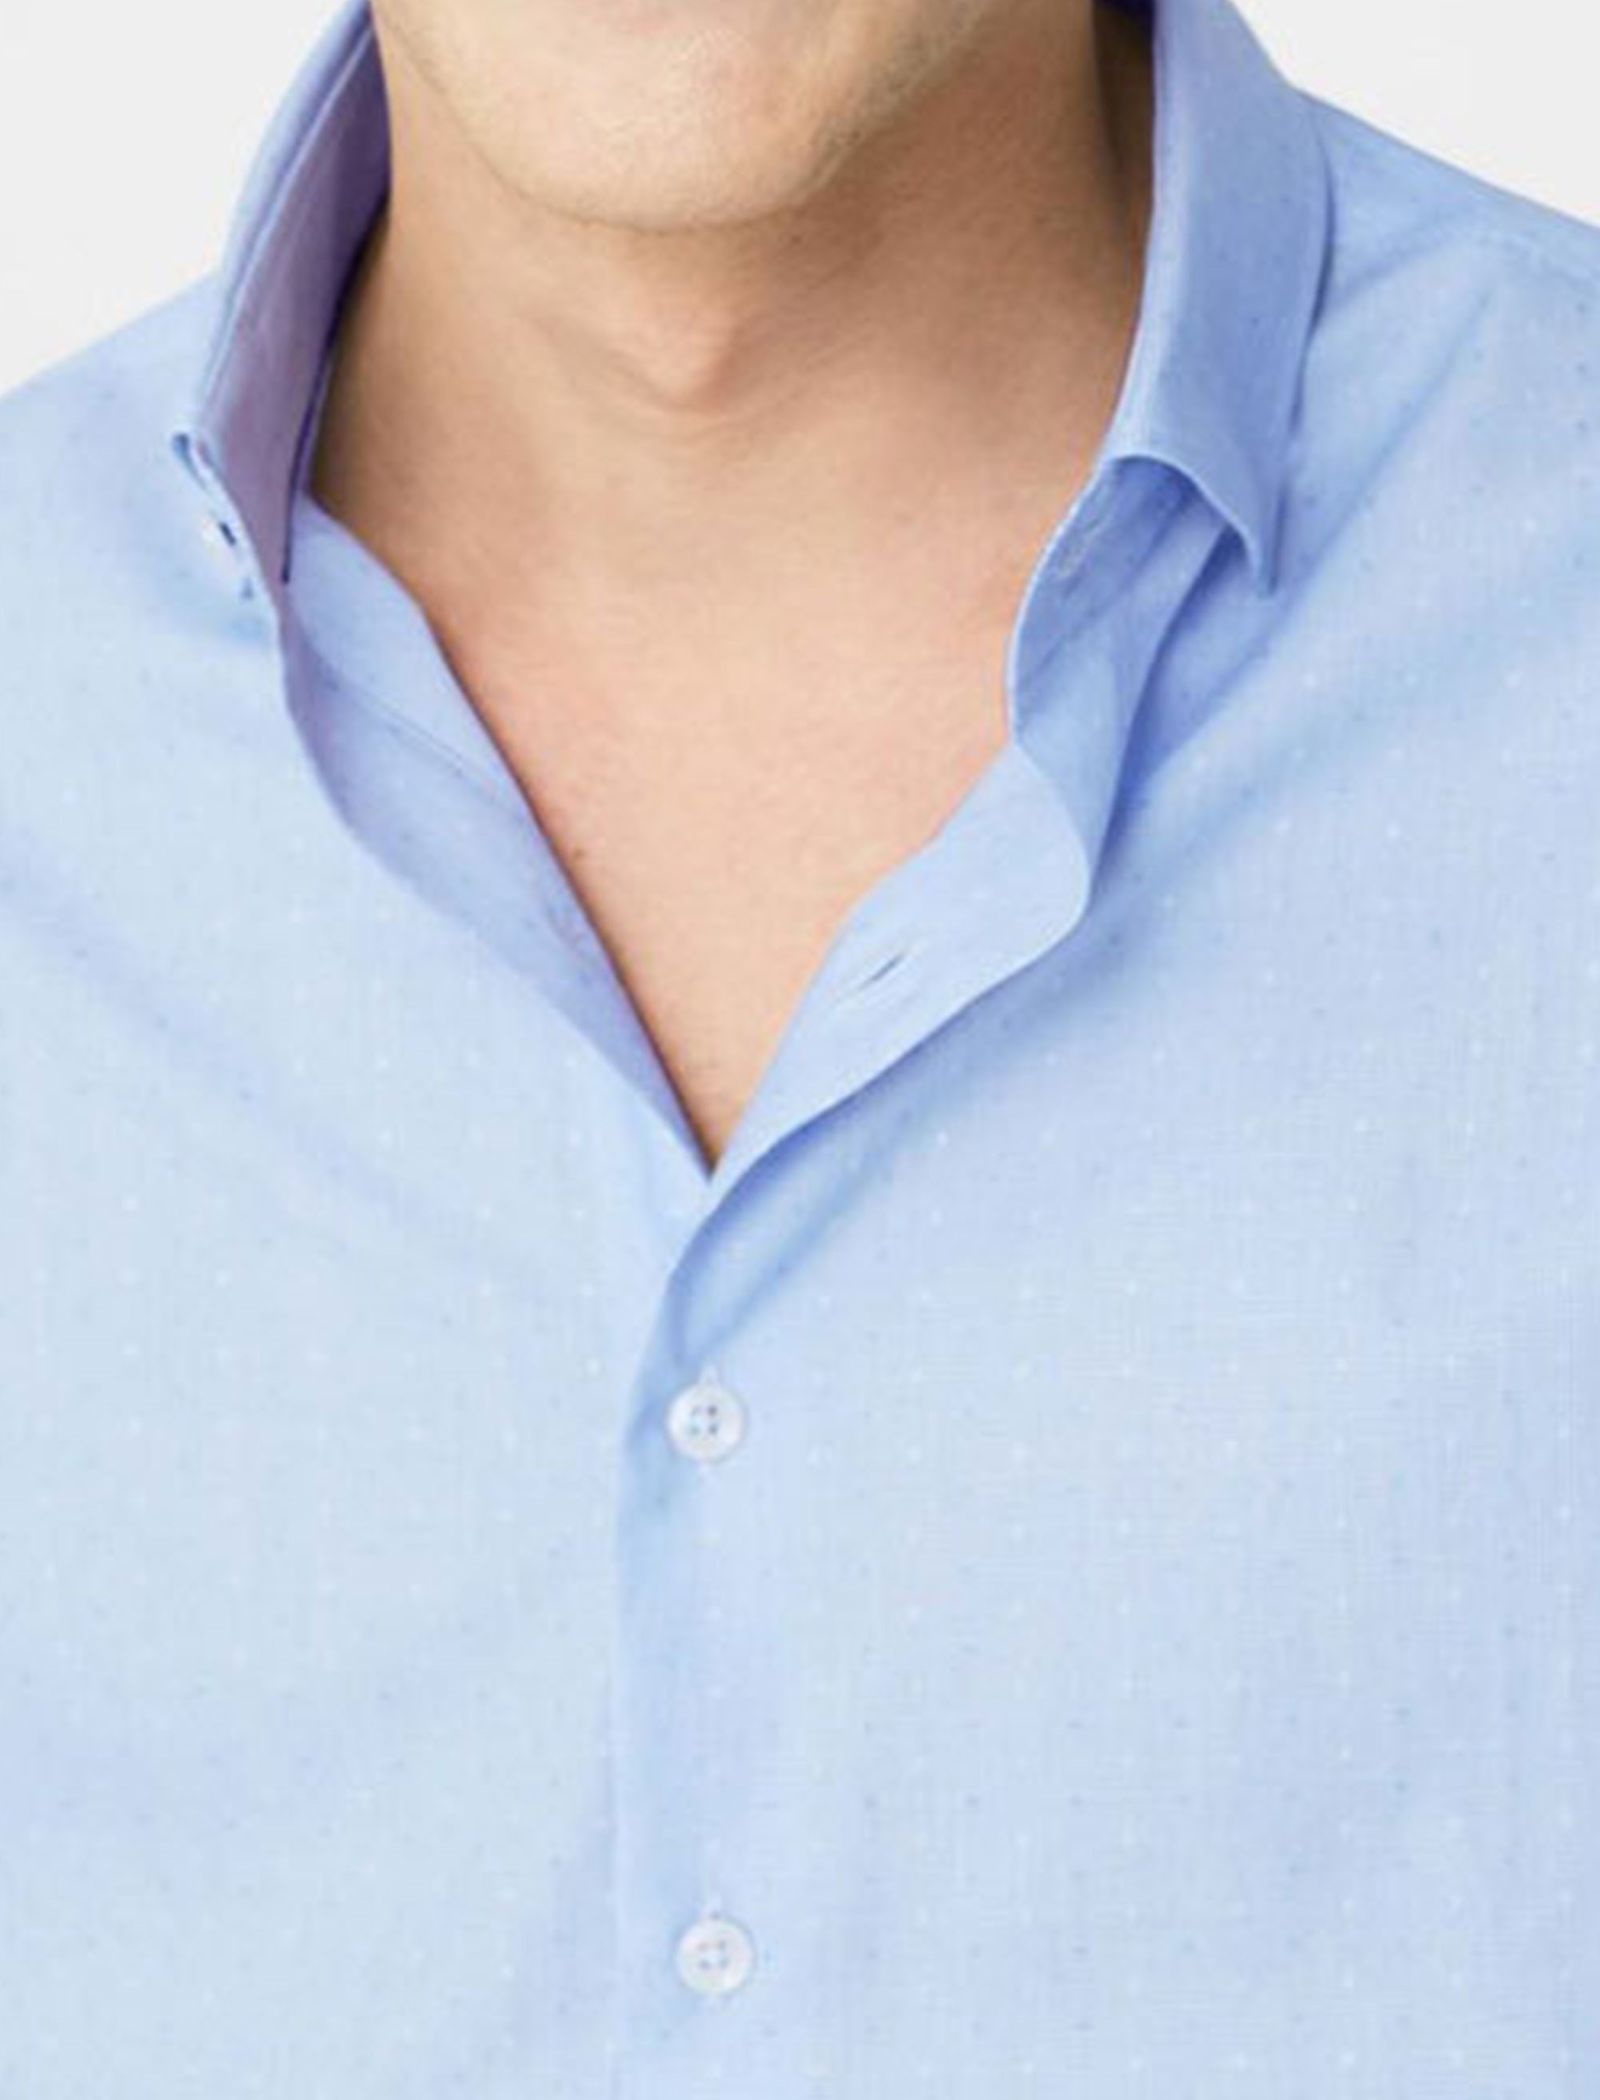 پیراهن رسمی مردانه - مانگو - آبي روشن - 7